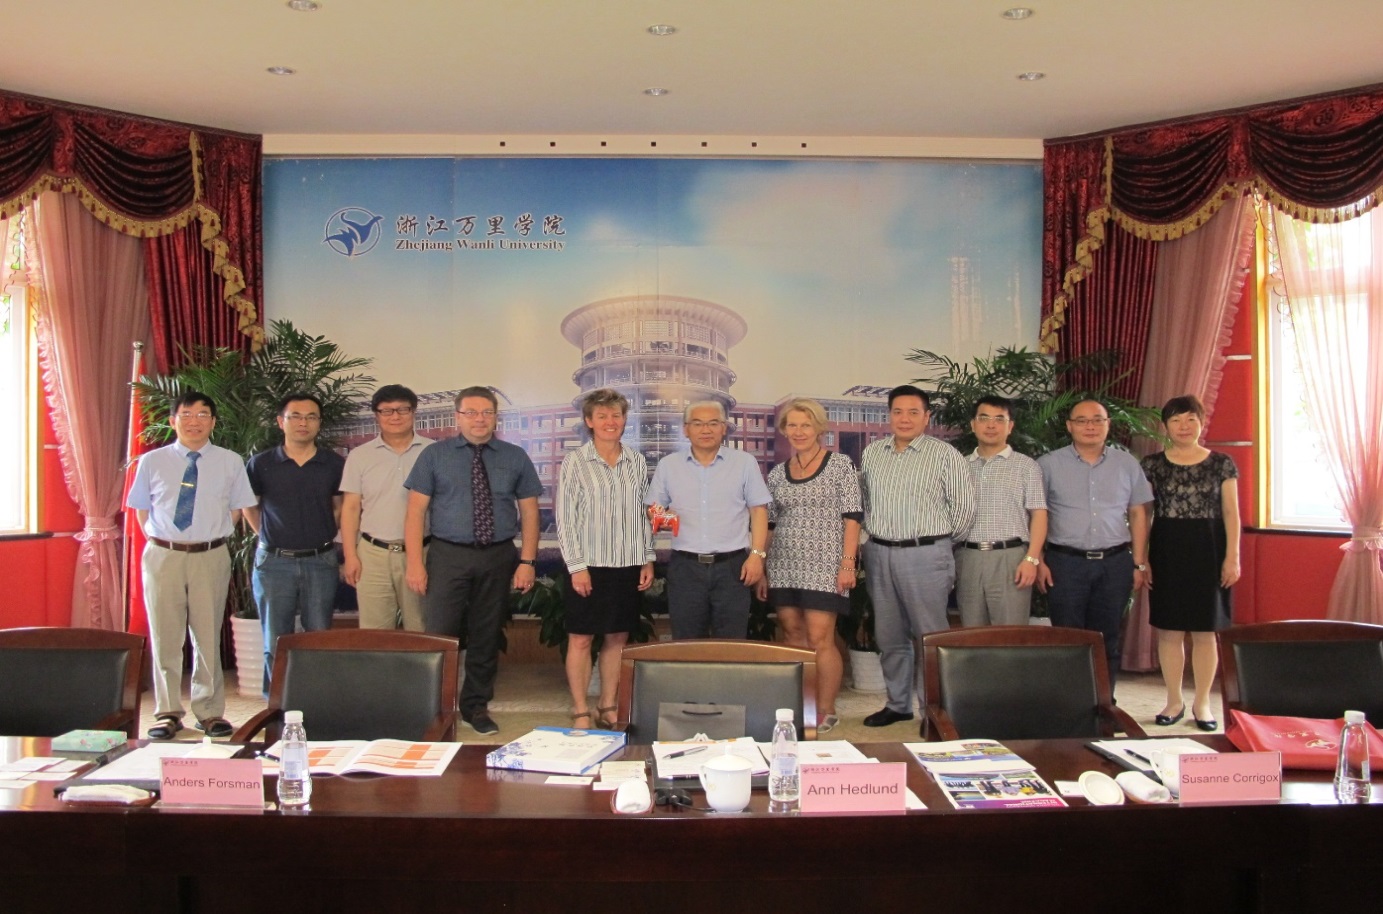 Representatives from Dalarna University in China